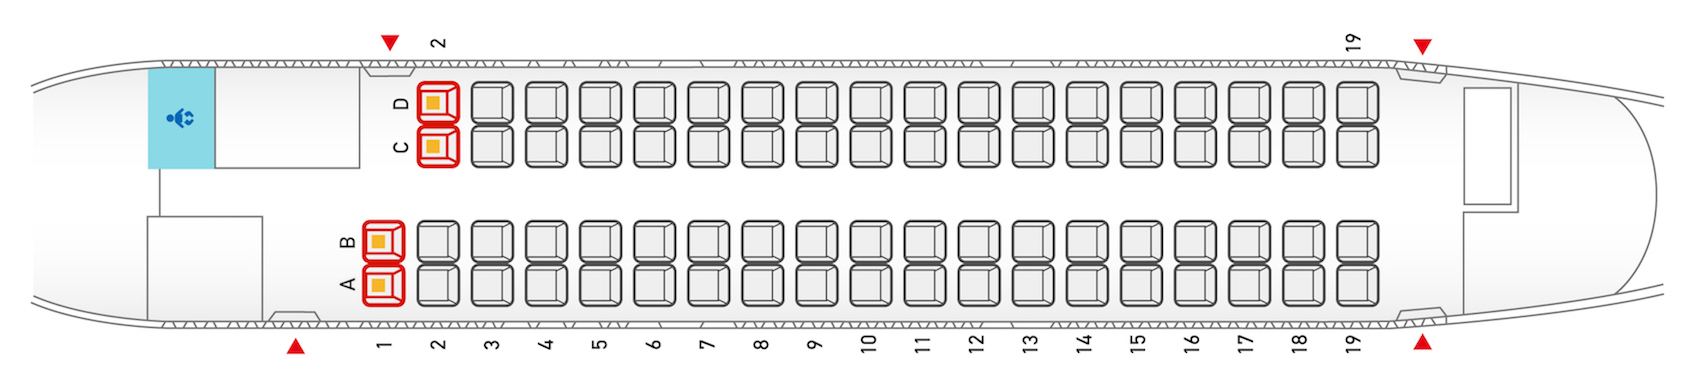 DHC-8-400 座席表